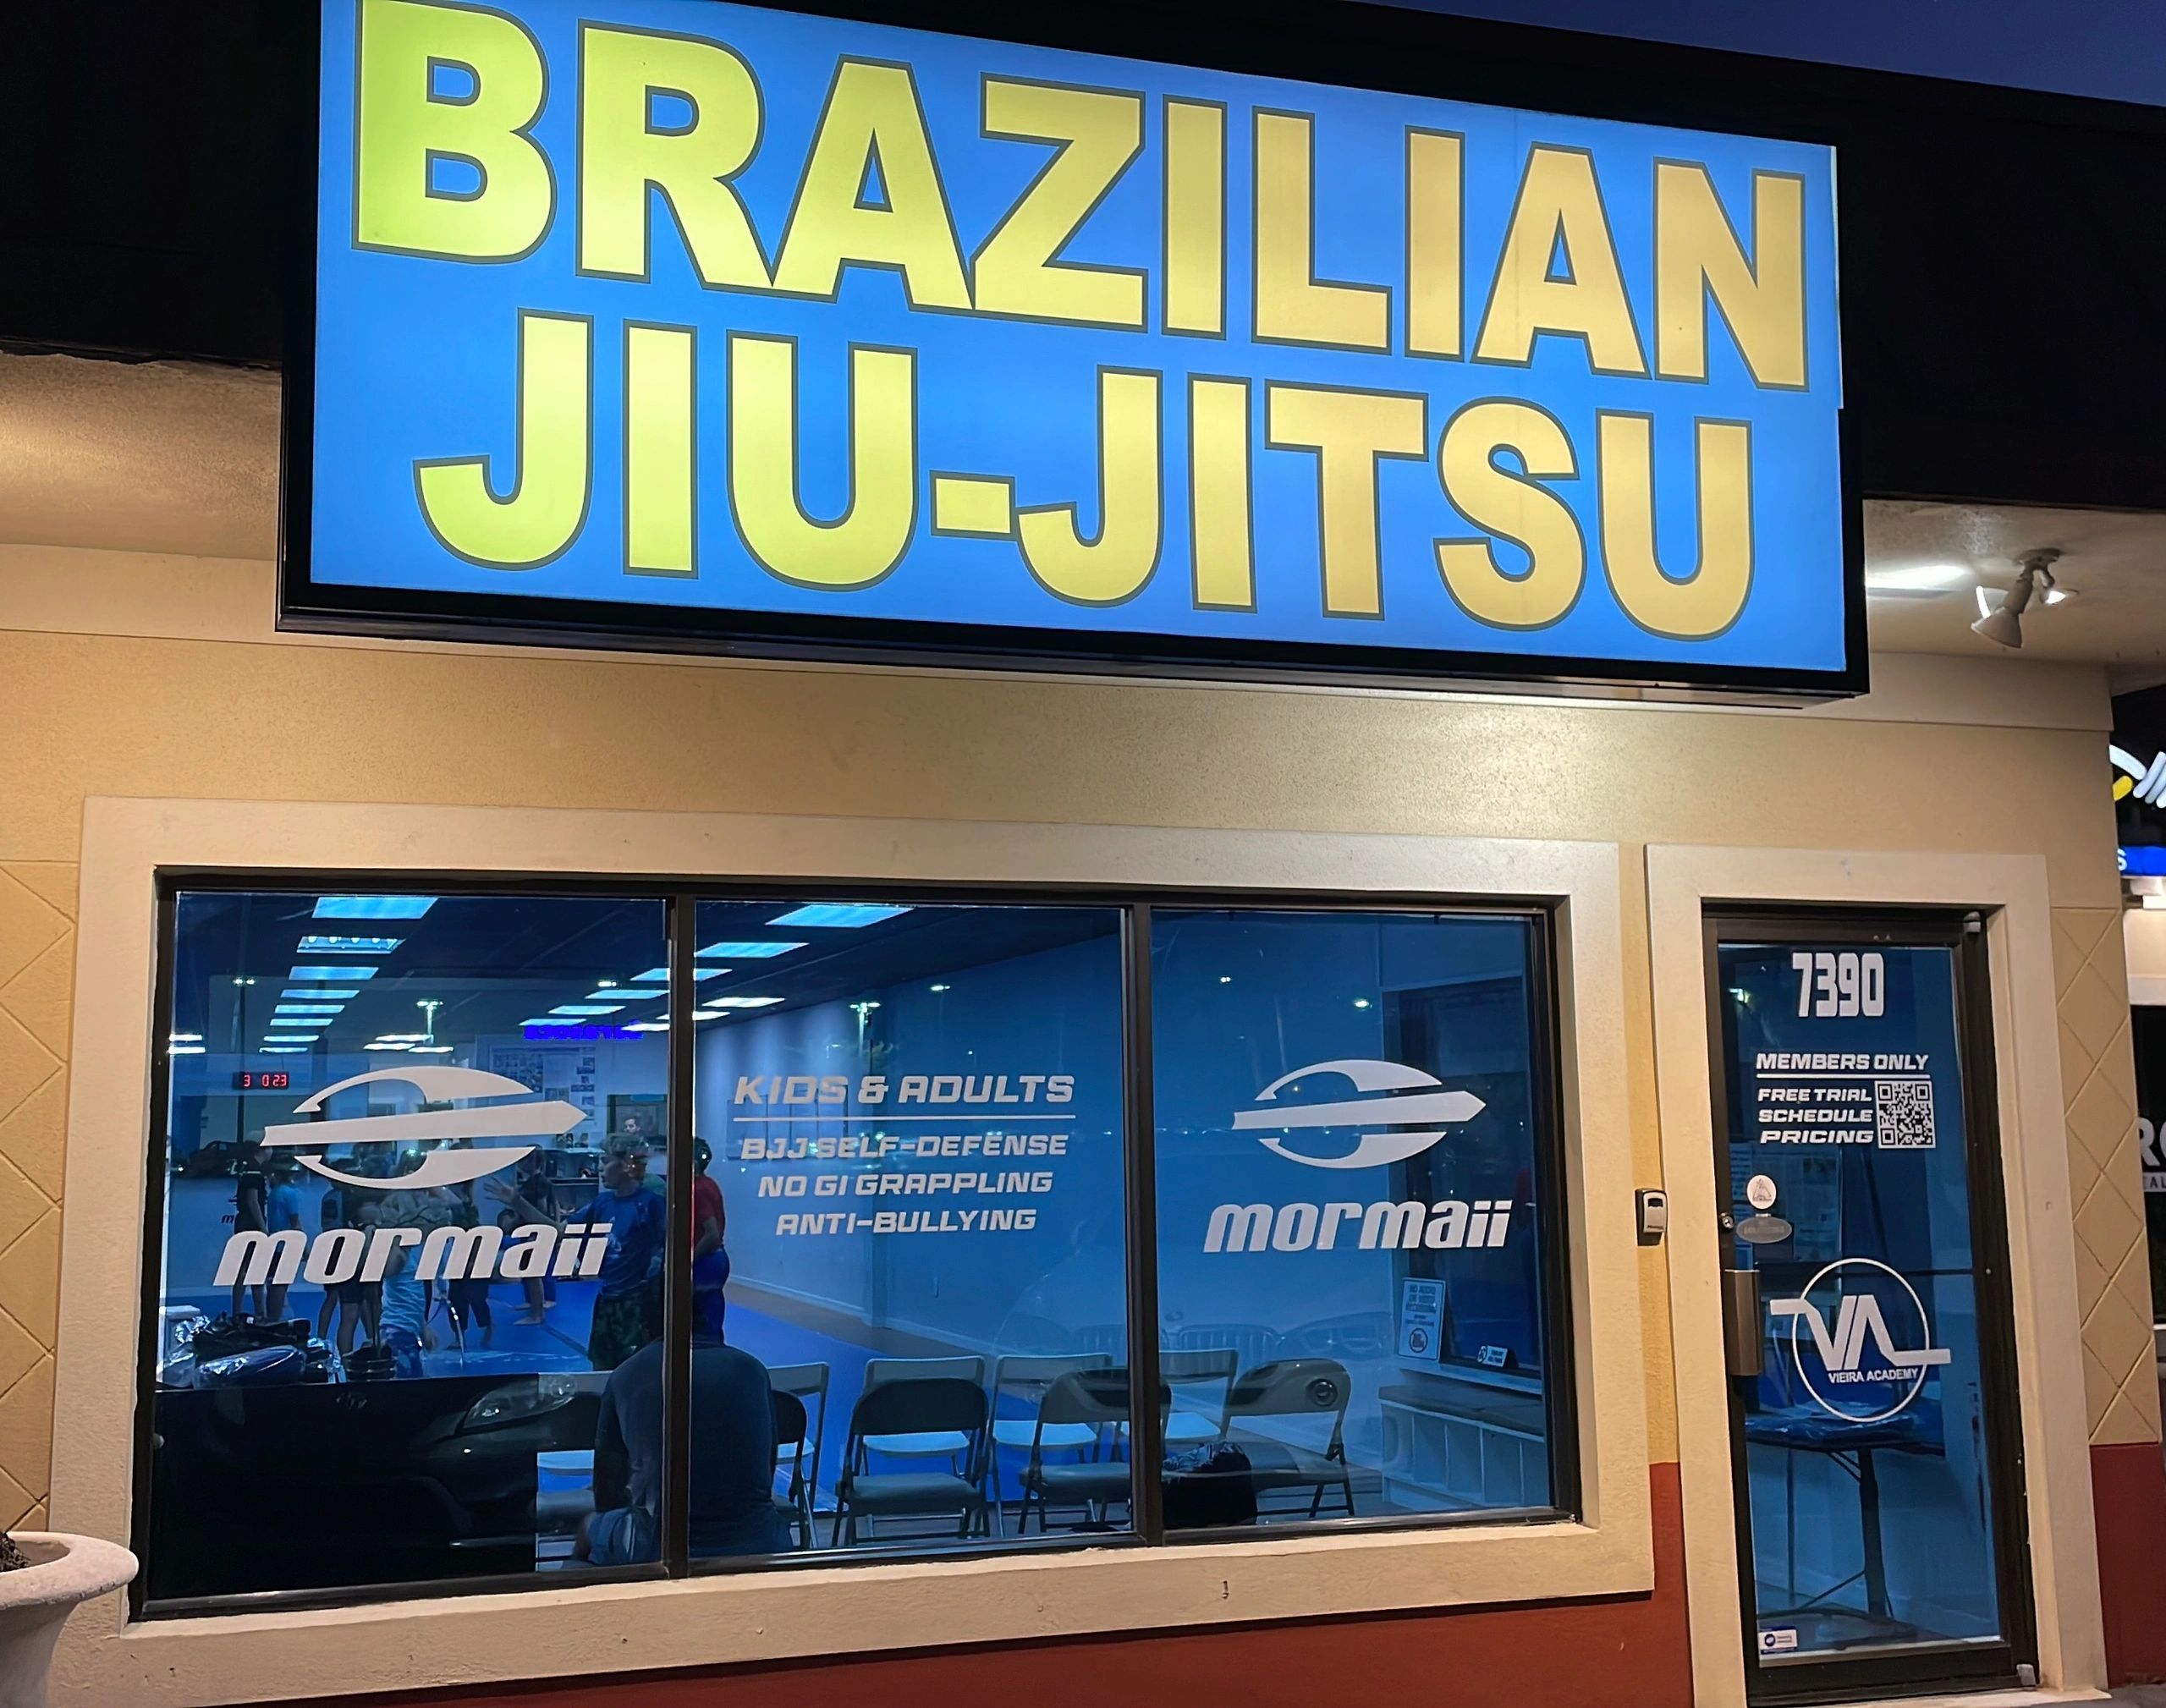 Vieira Martial Arts Academy
Brazilian Jiu-Jitsu
BJJ & Self-Defense
Kids & Adults
Sarasota, FL